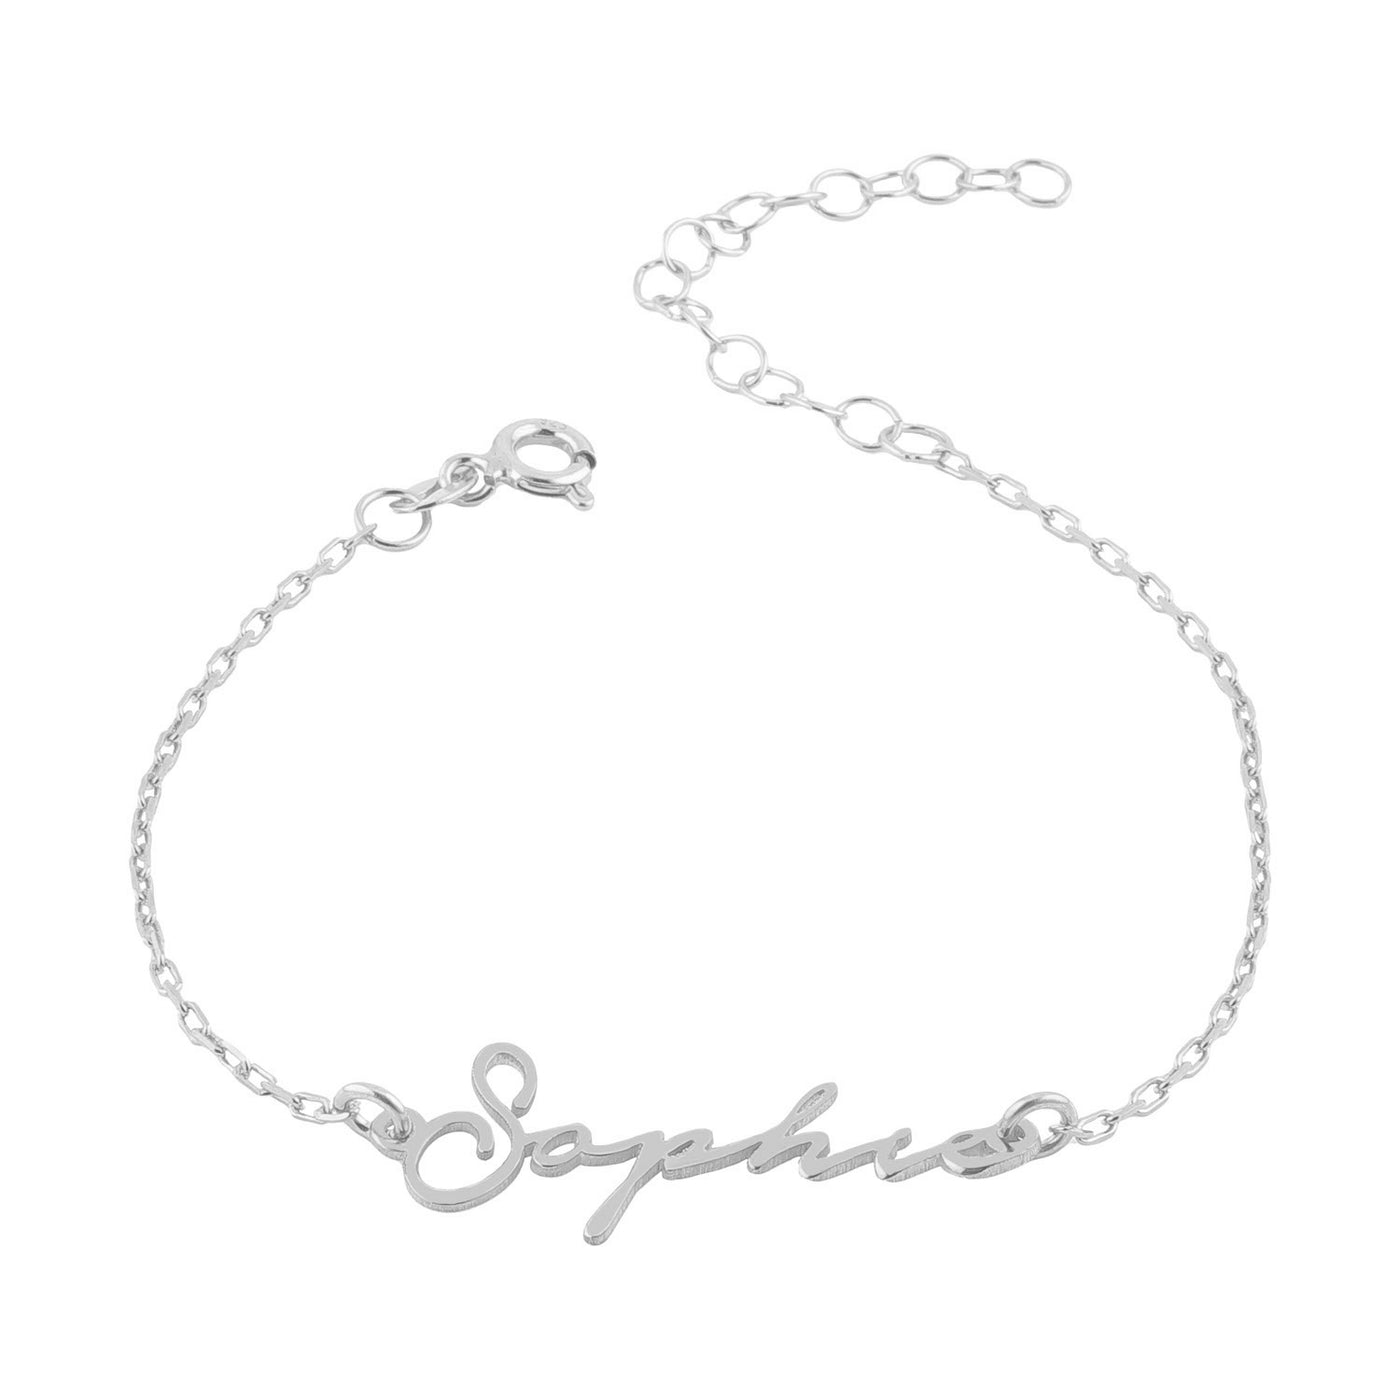 Name bracelet - Notera variant